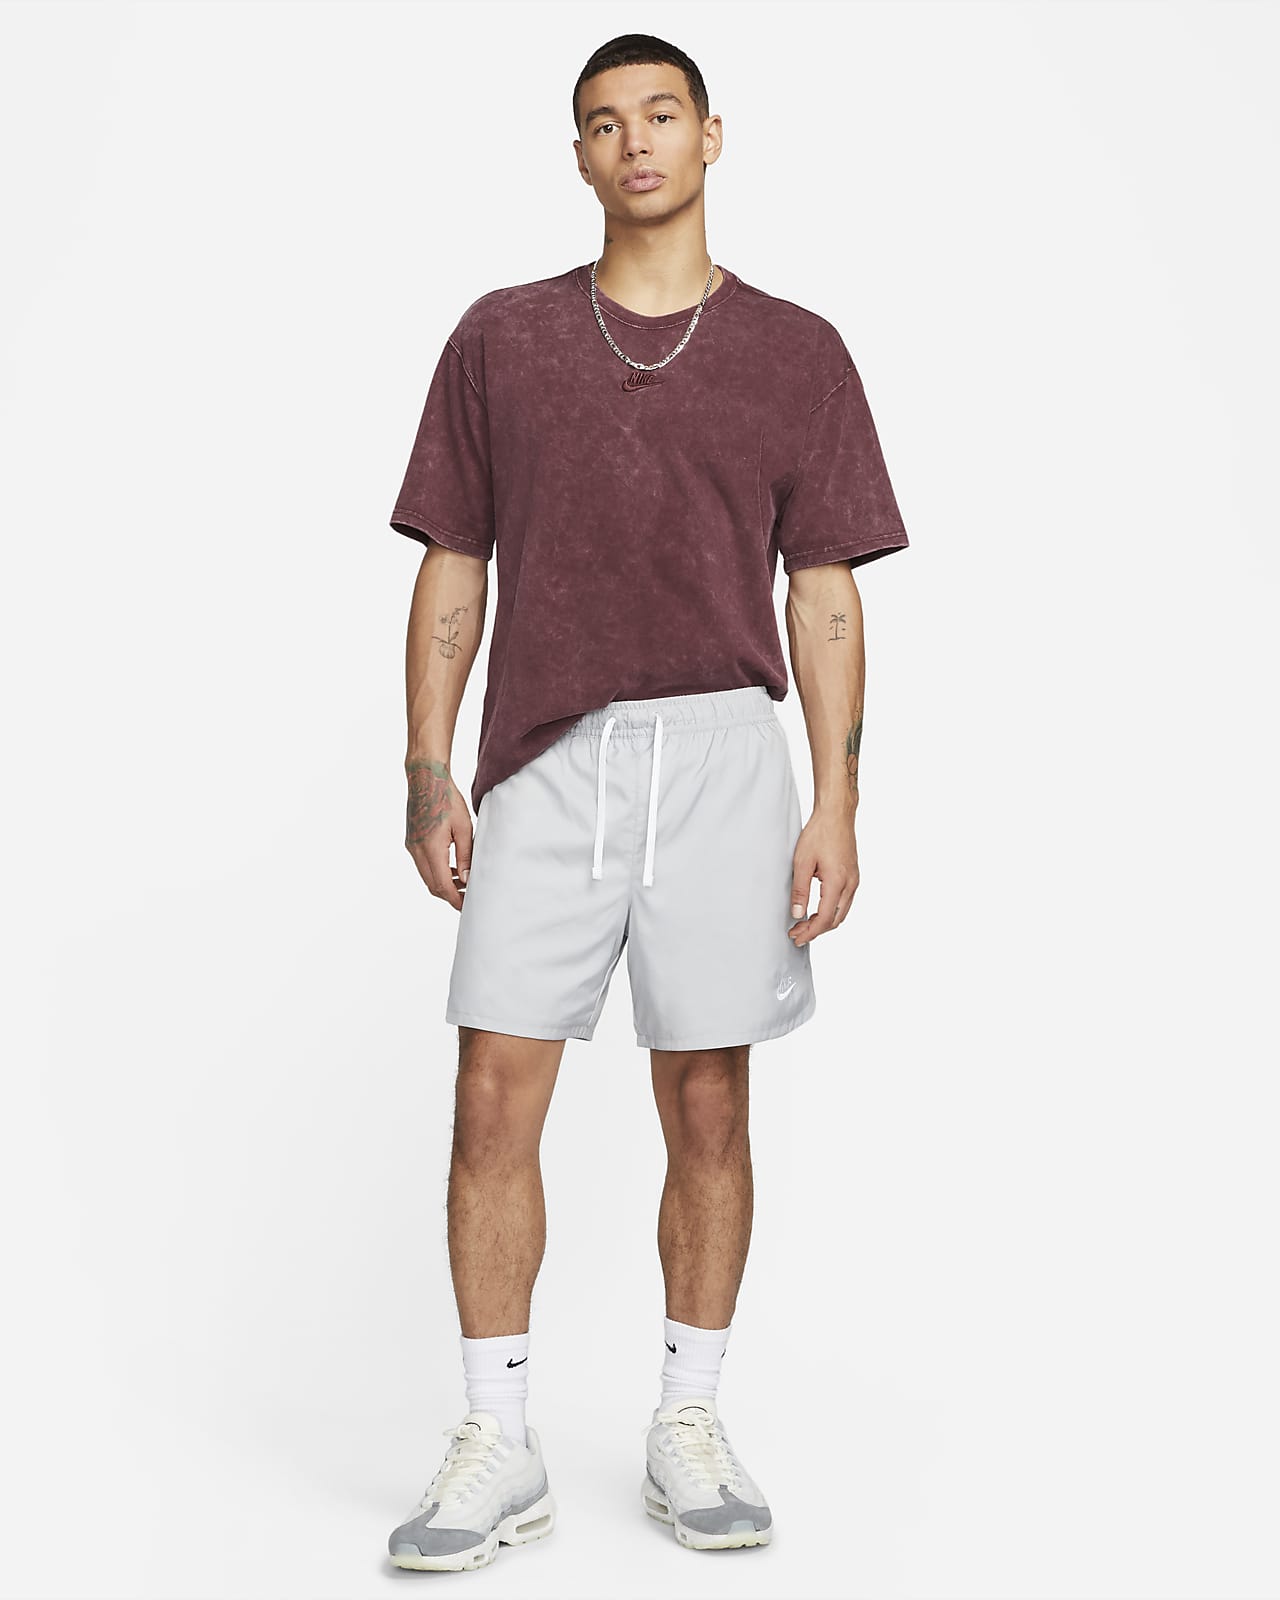 Nike Men\'s Max90 T-Shirt. Sportswear